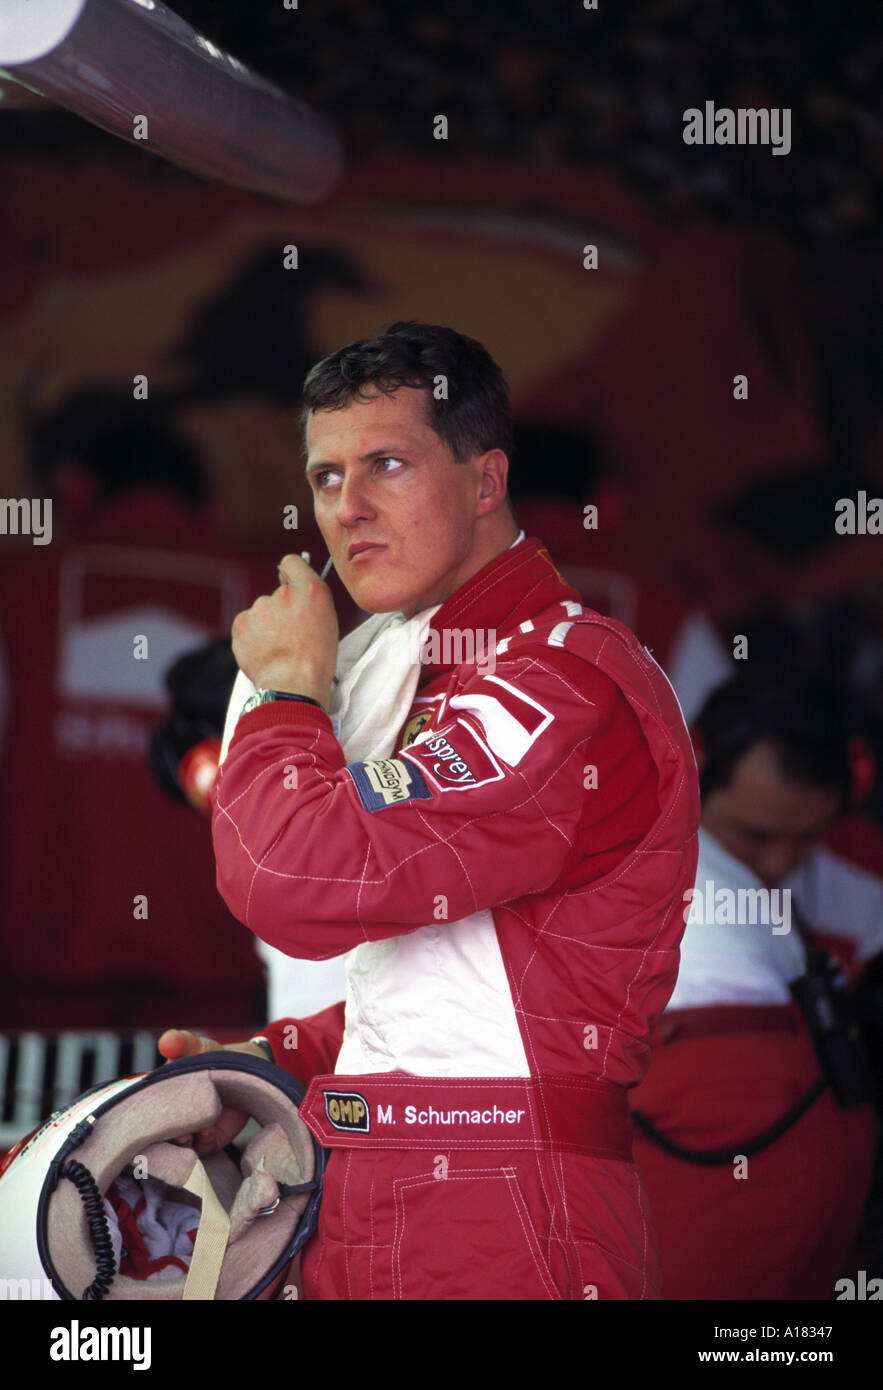 Michael Schumacher Foto de stock